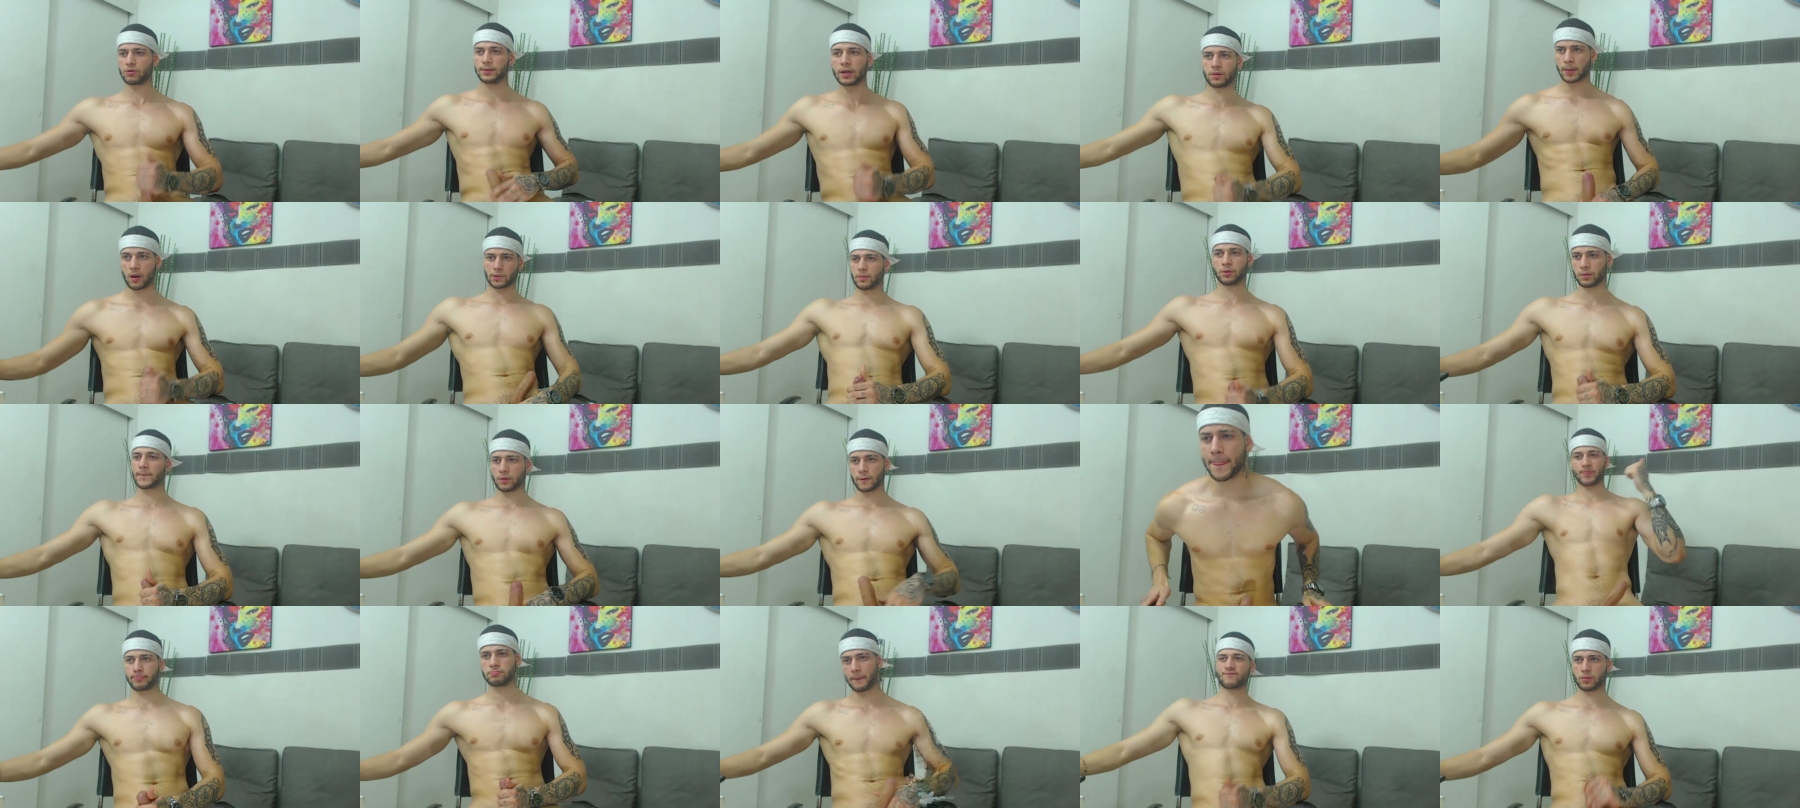 _Jamesleandros  19-11-2021 Male Webcam